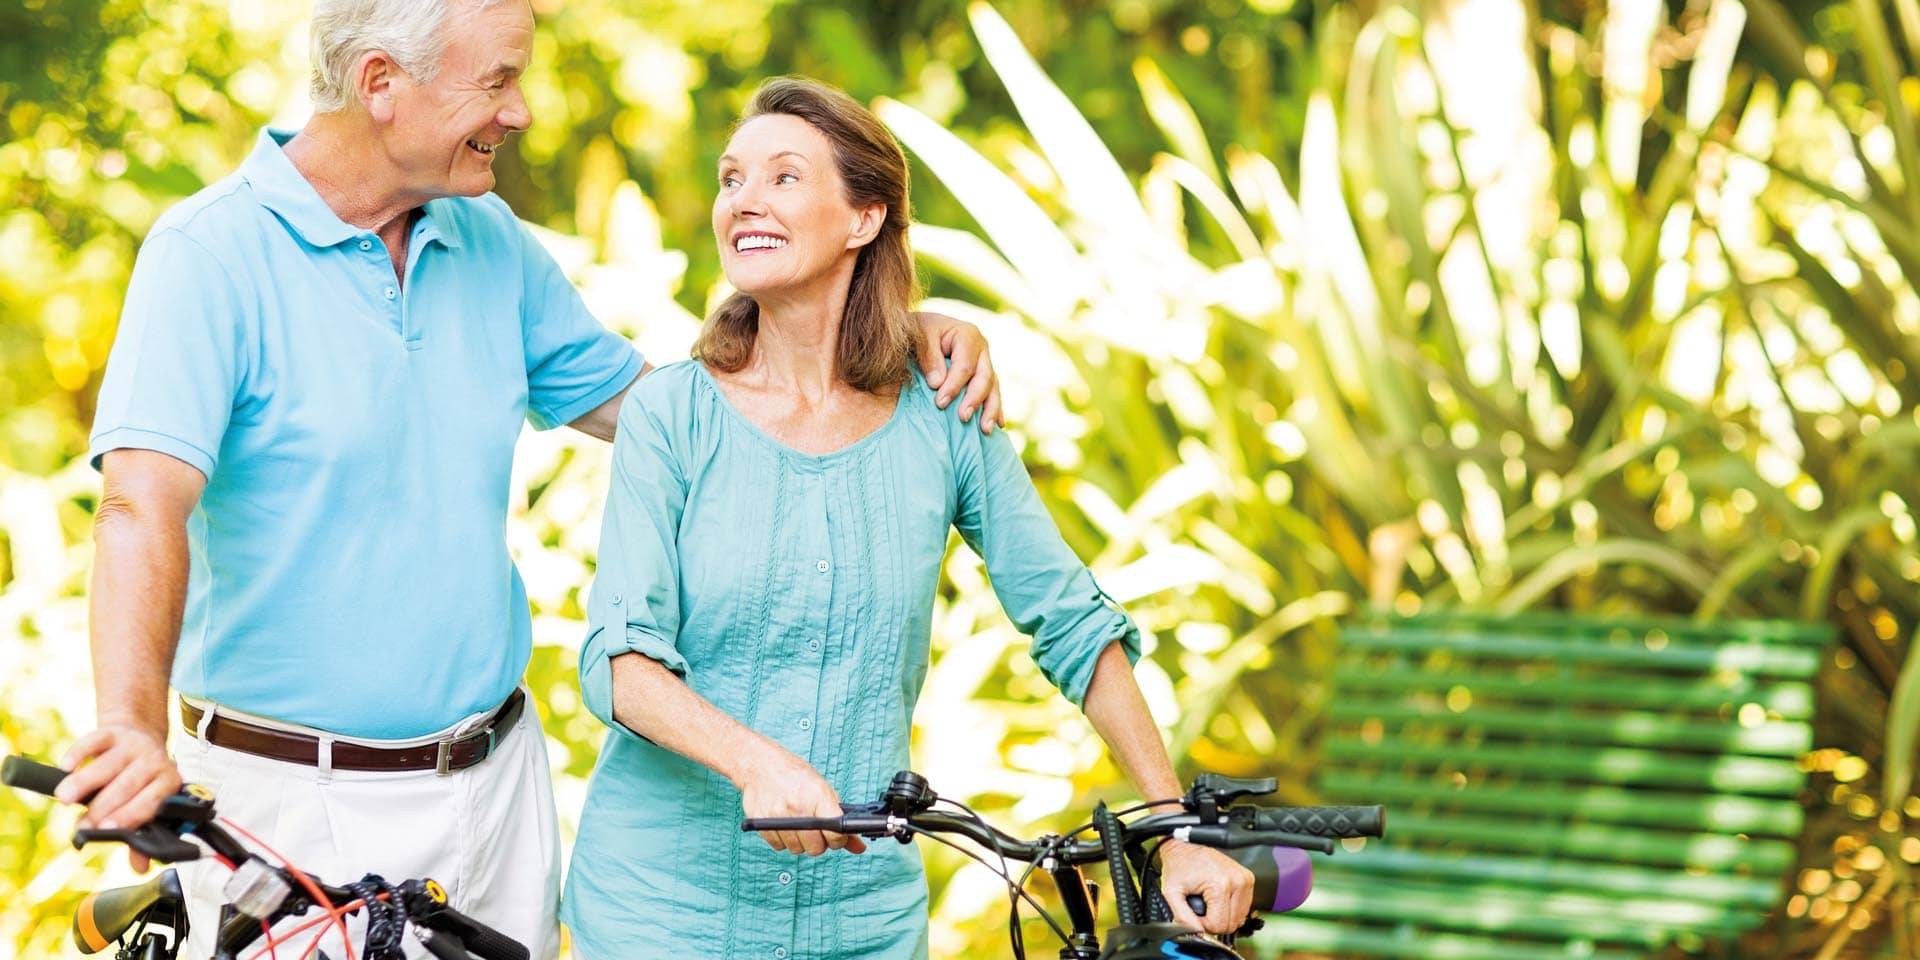 Loving-Senior-Couple-Holding-Bicycles-In-Park-000045279726_XXXLarge